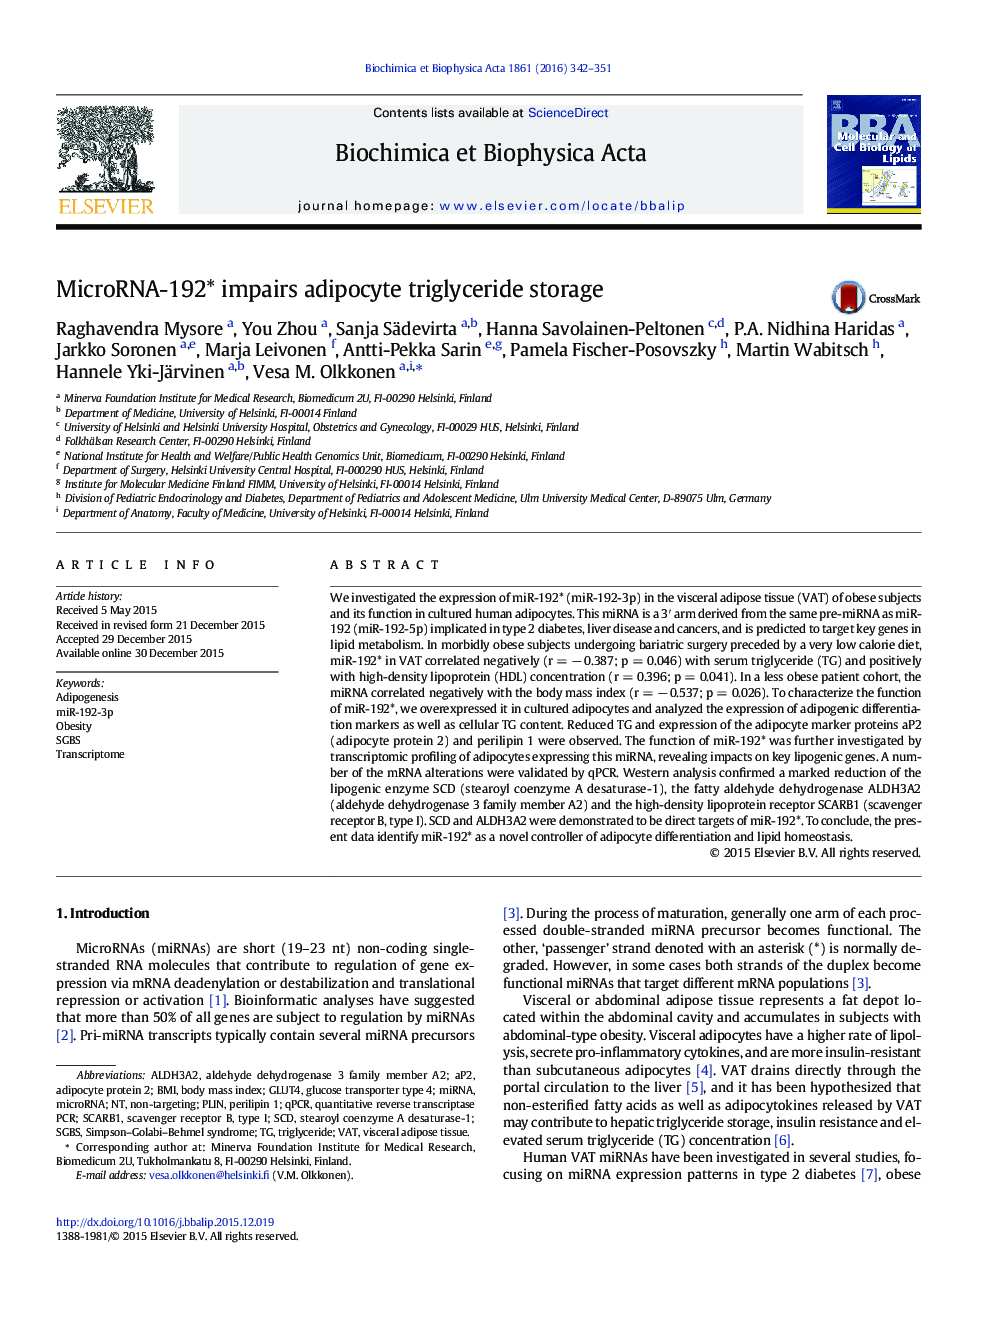 MicroRNA-192* impairs adipocyte triglyceride storage